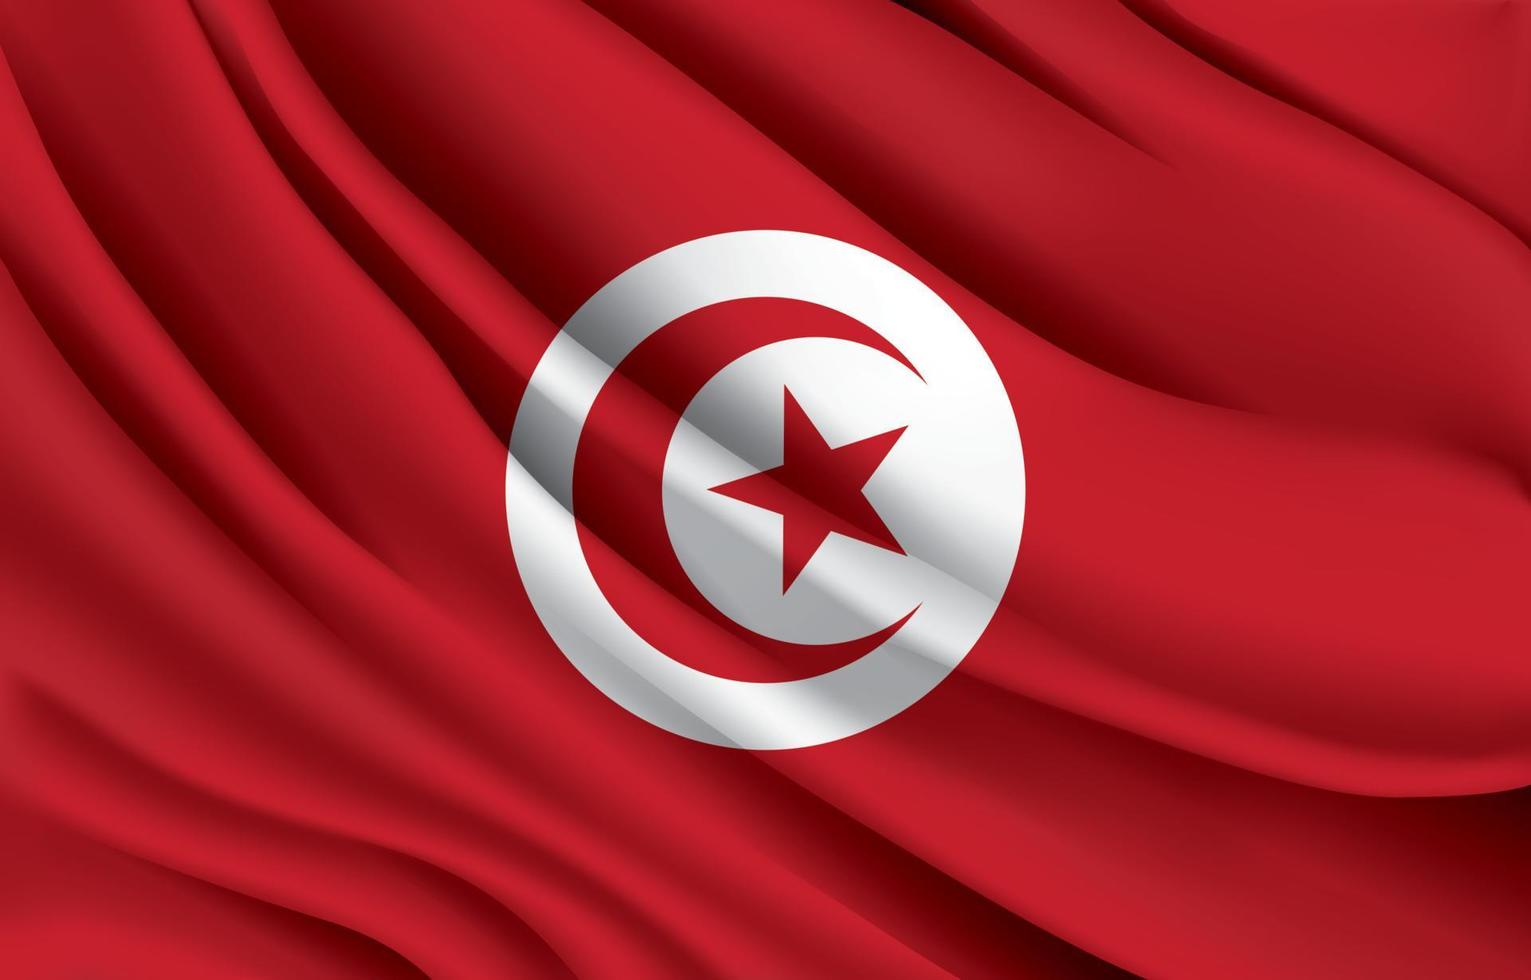 tunisia national flag waving realistic vector illustration